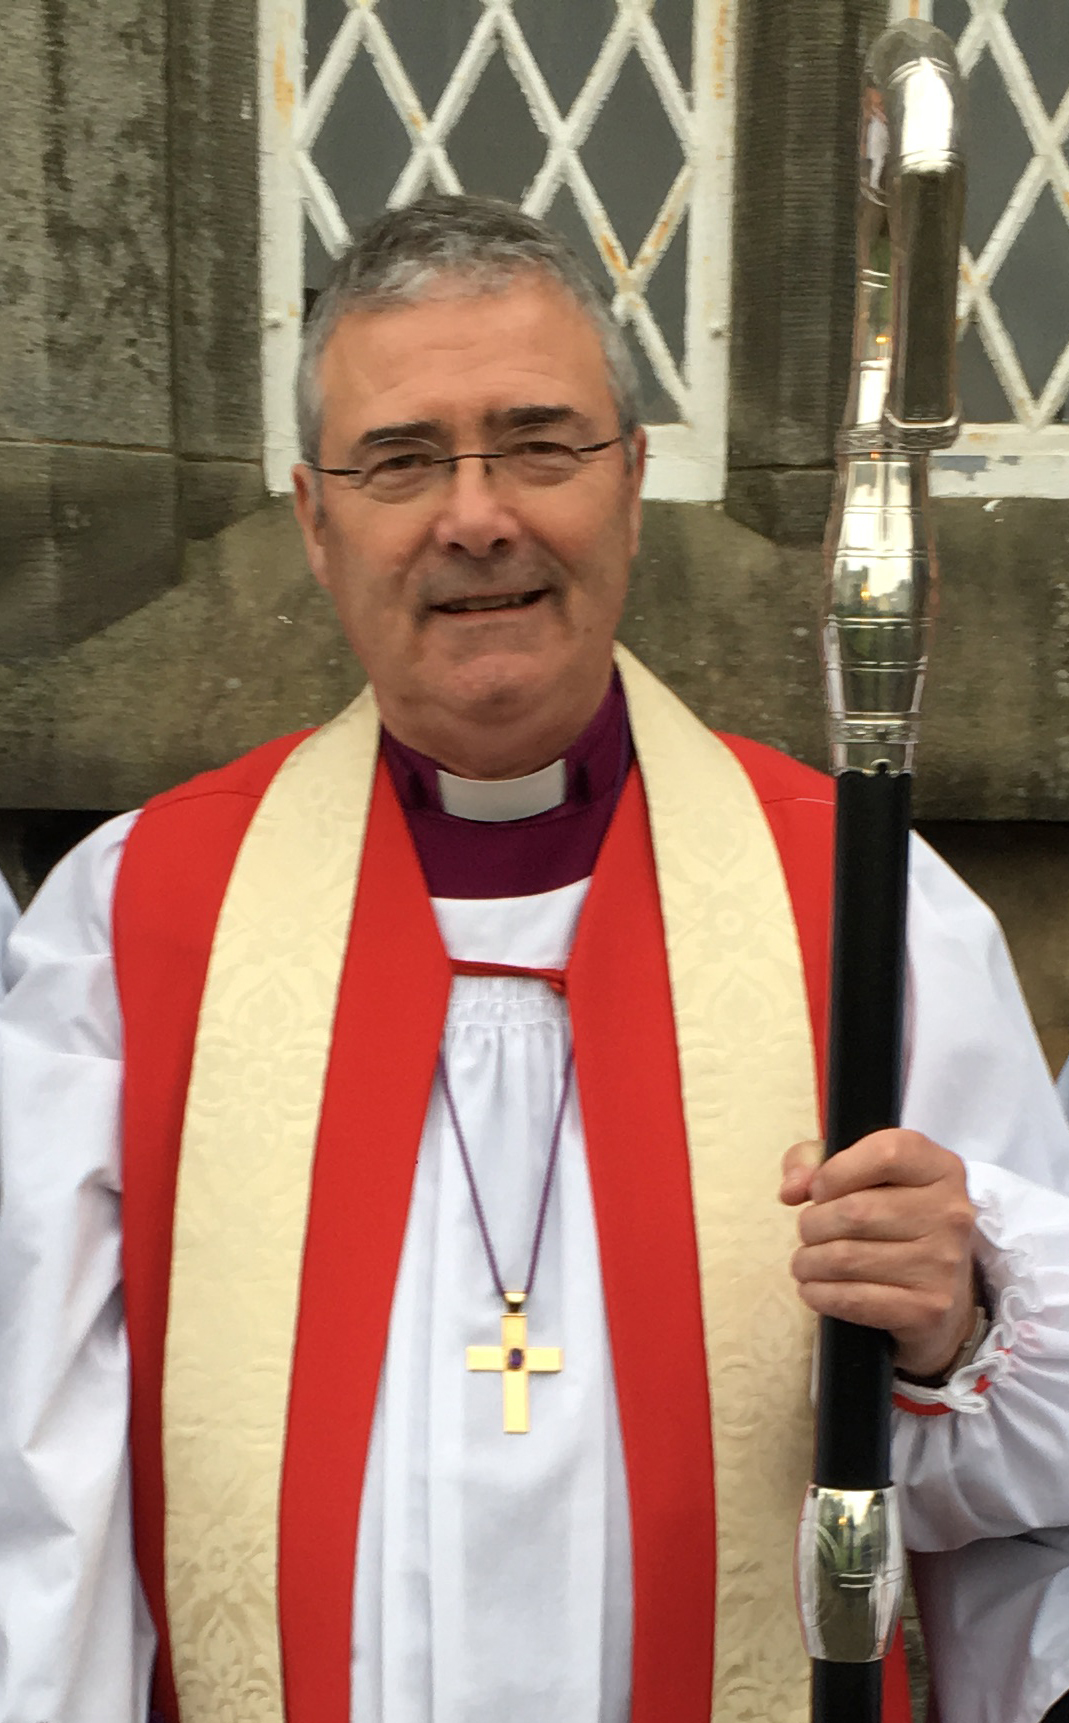 Bishop John McDowell